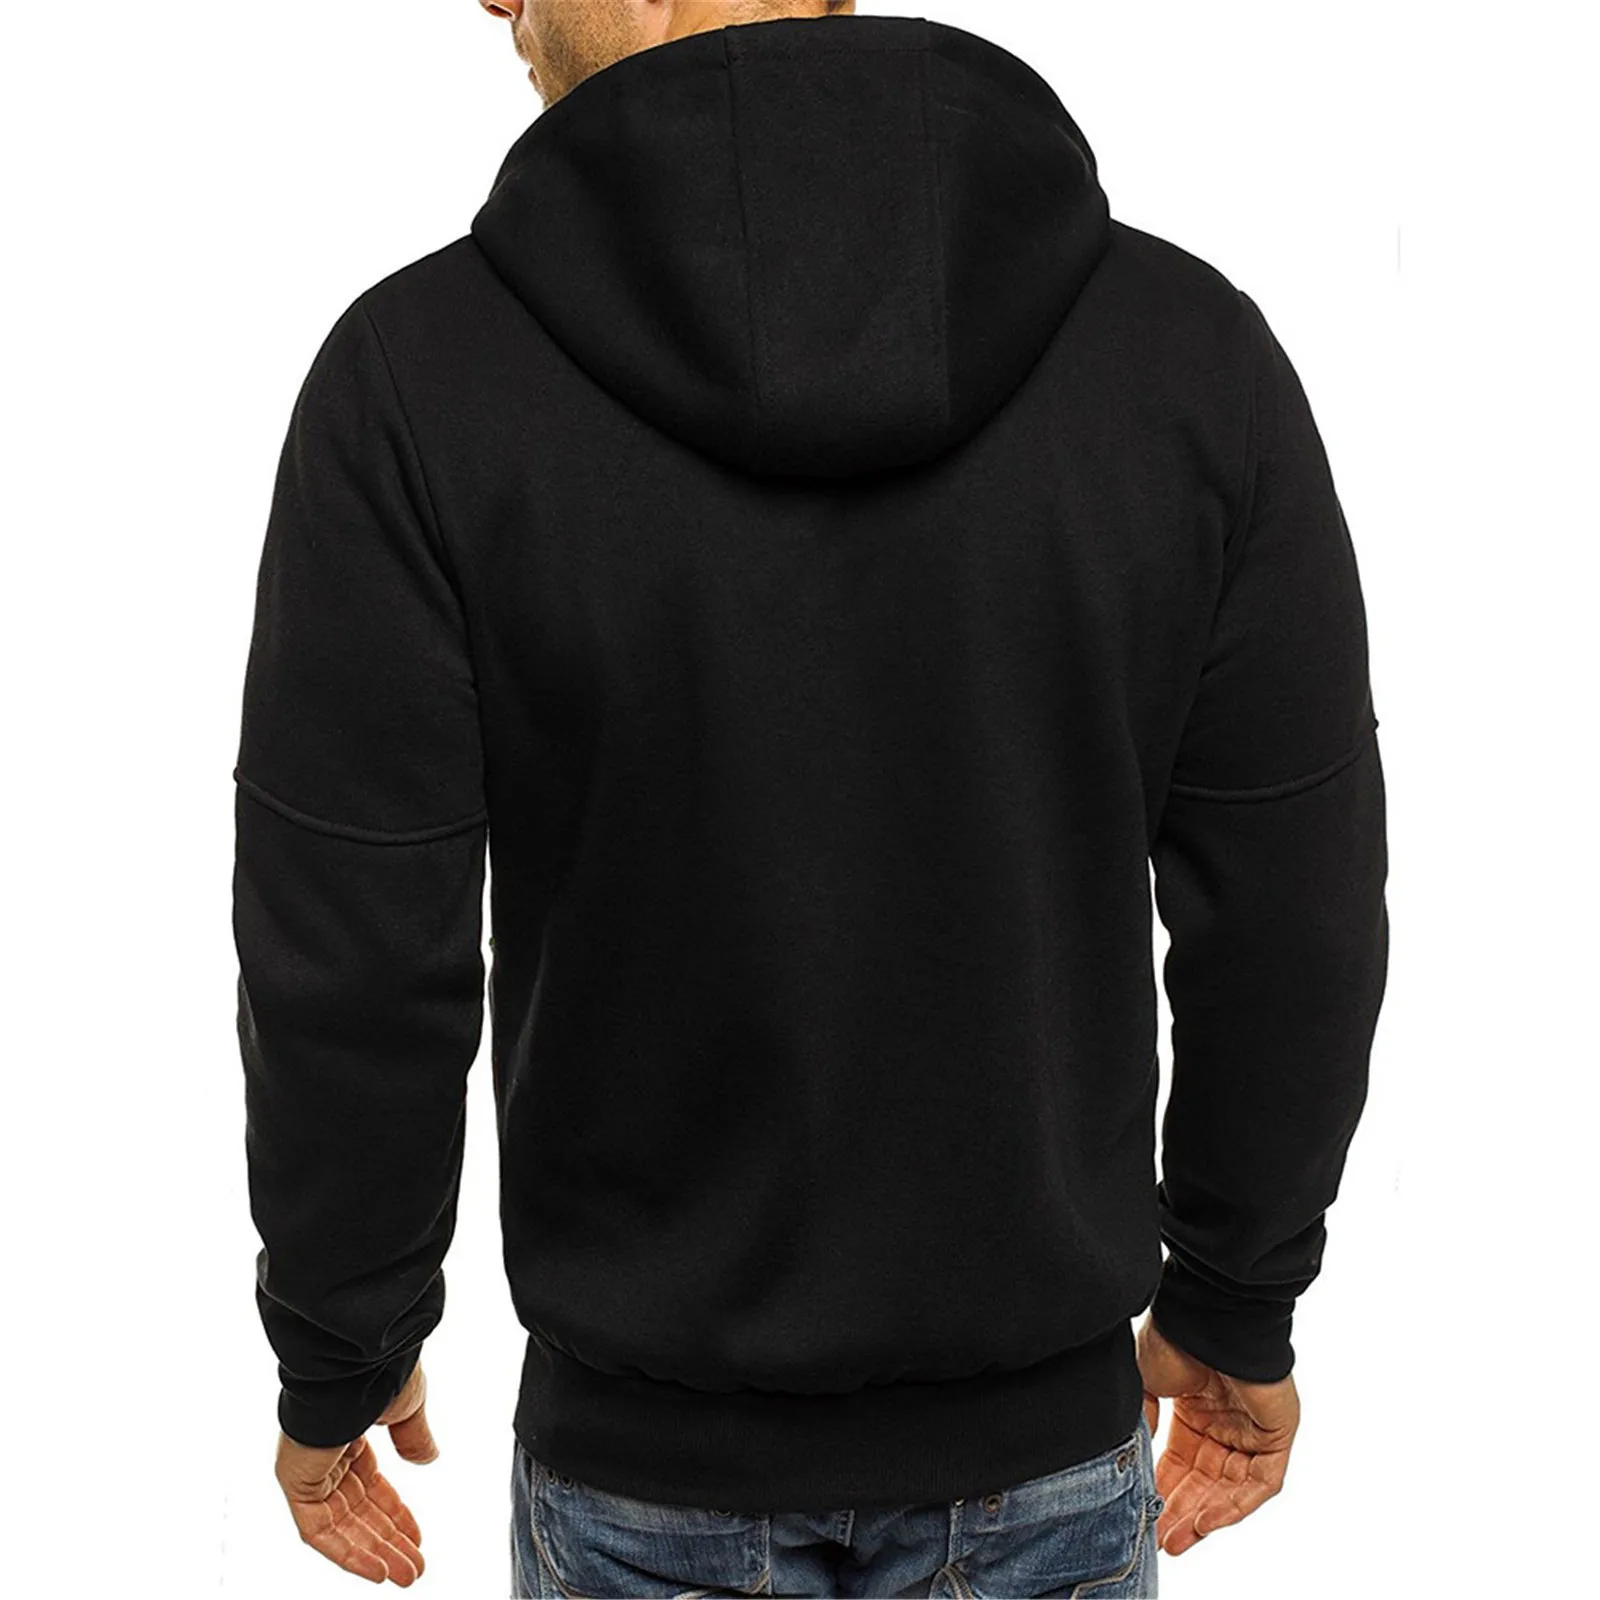 GRT Fitness Hfcdd003f6be147da9fd9212d12f6f6d0u New 2021 Men's Splice Cap with Long Sleeve Zip Sweater Tops Sweatshirt Outwear Warm Hoodie 